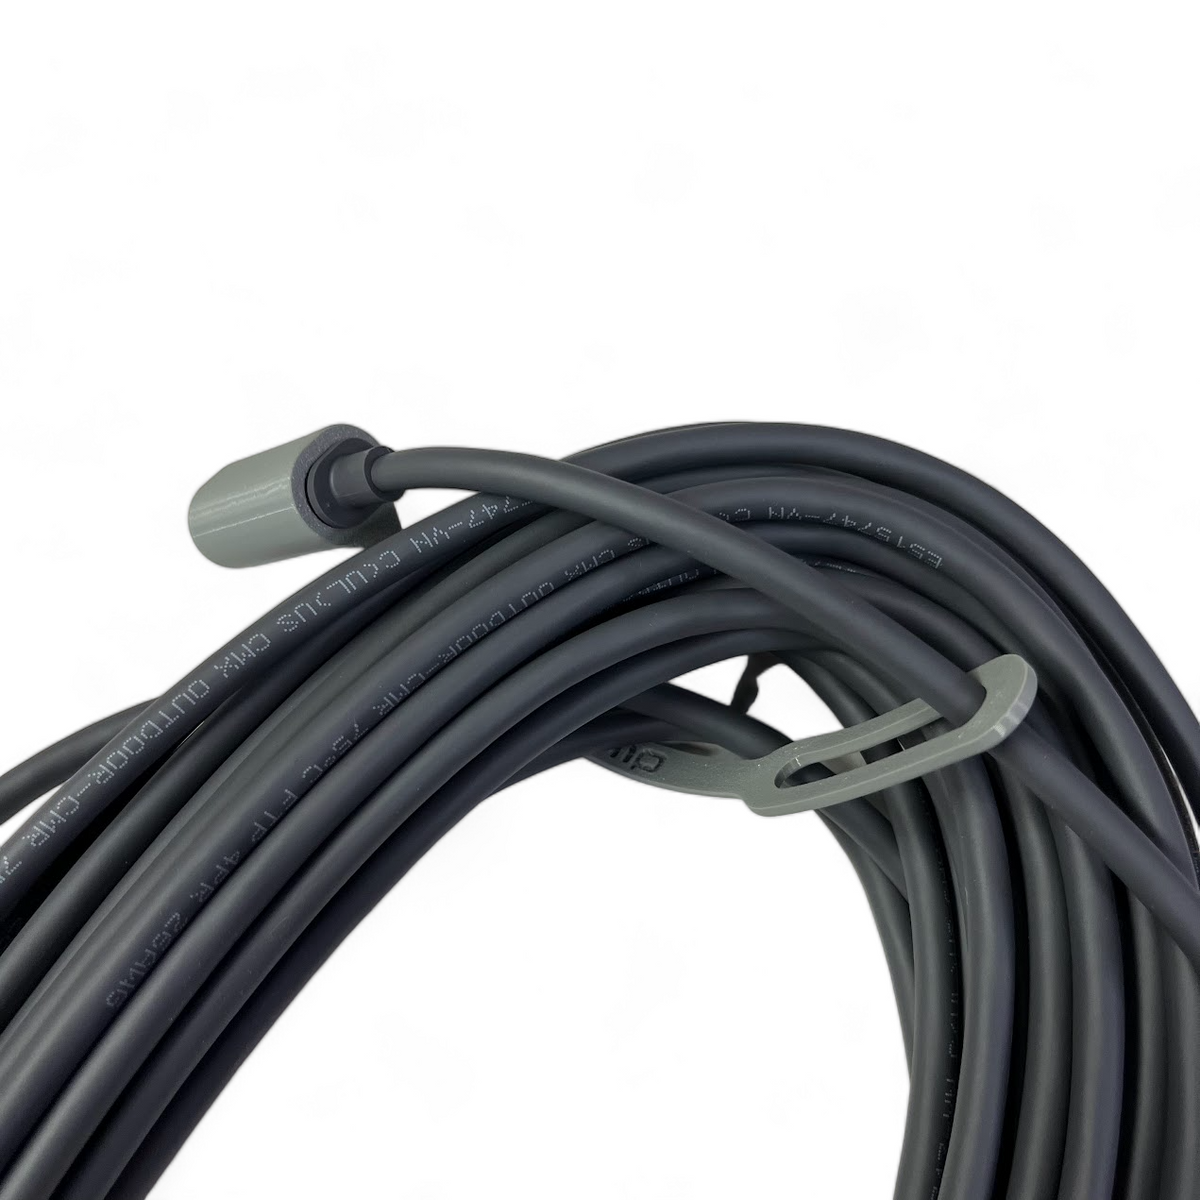 Starlink Gen 3 rubber cable protectors